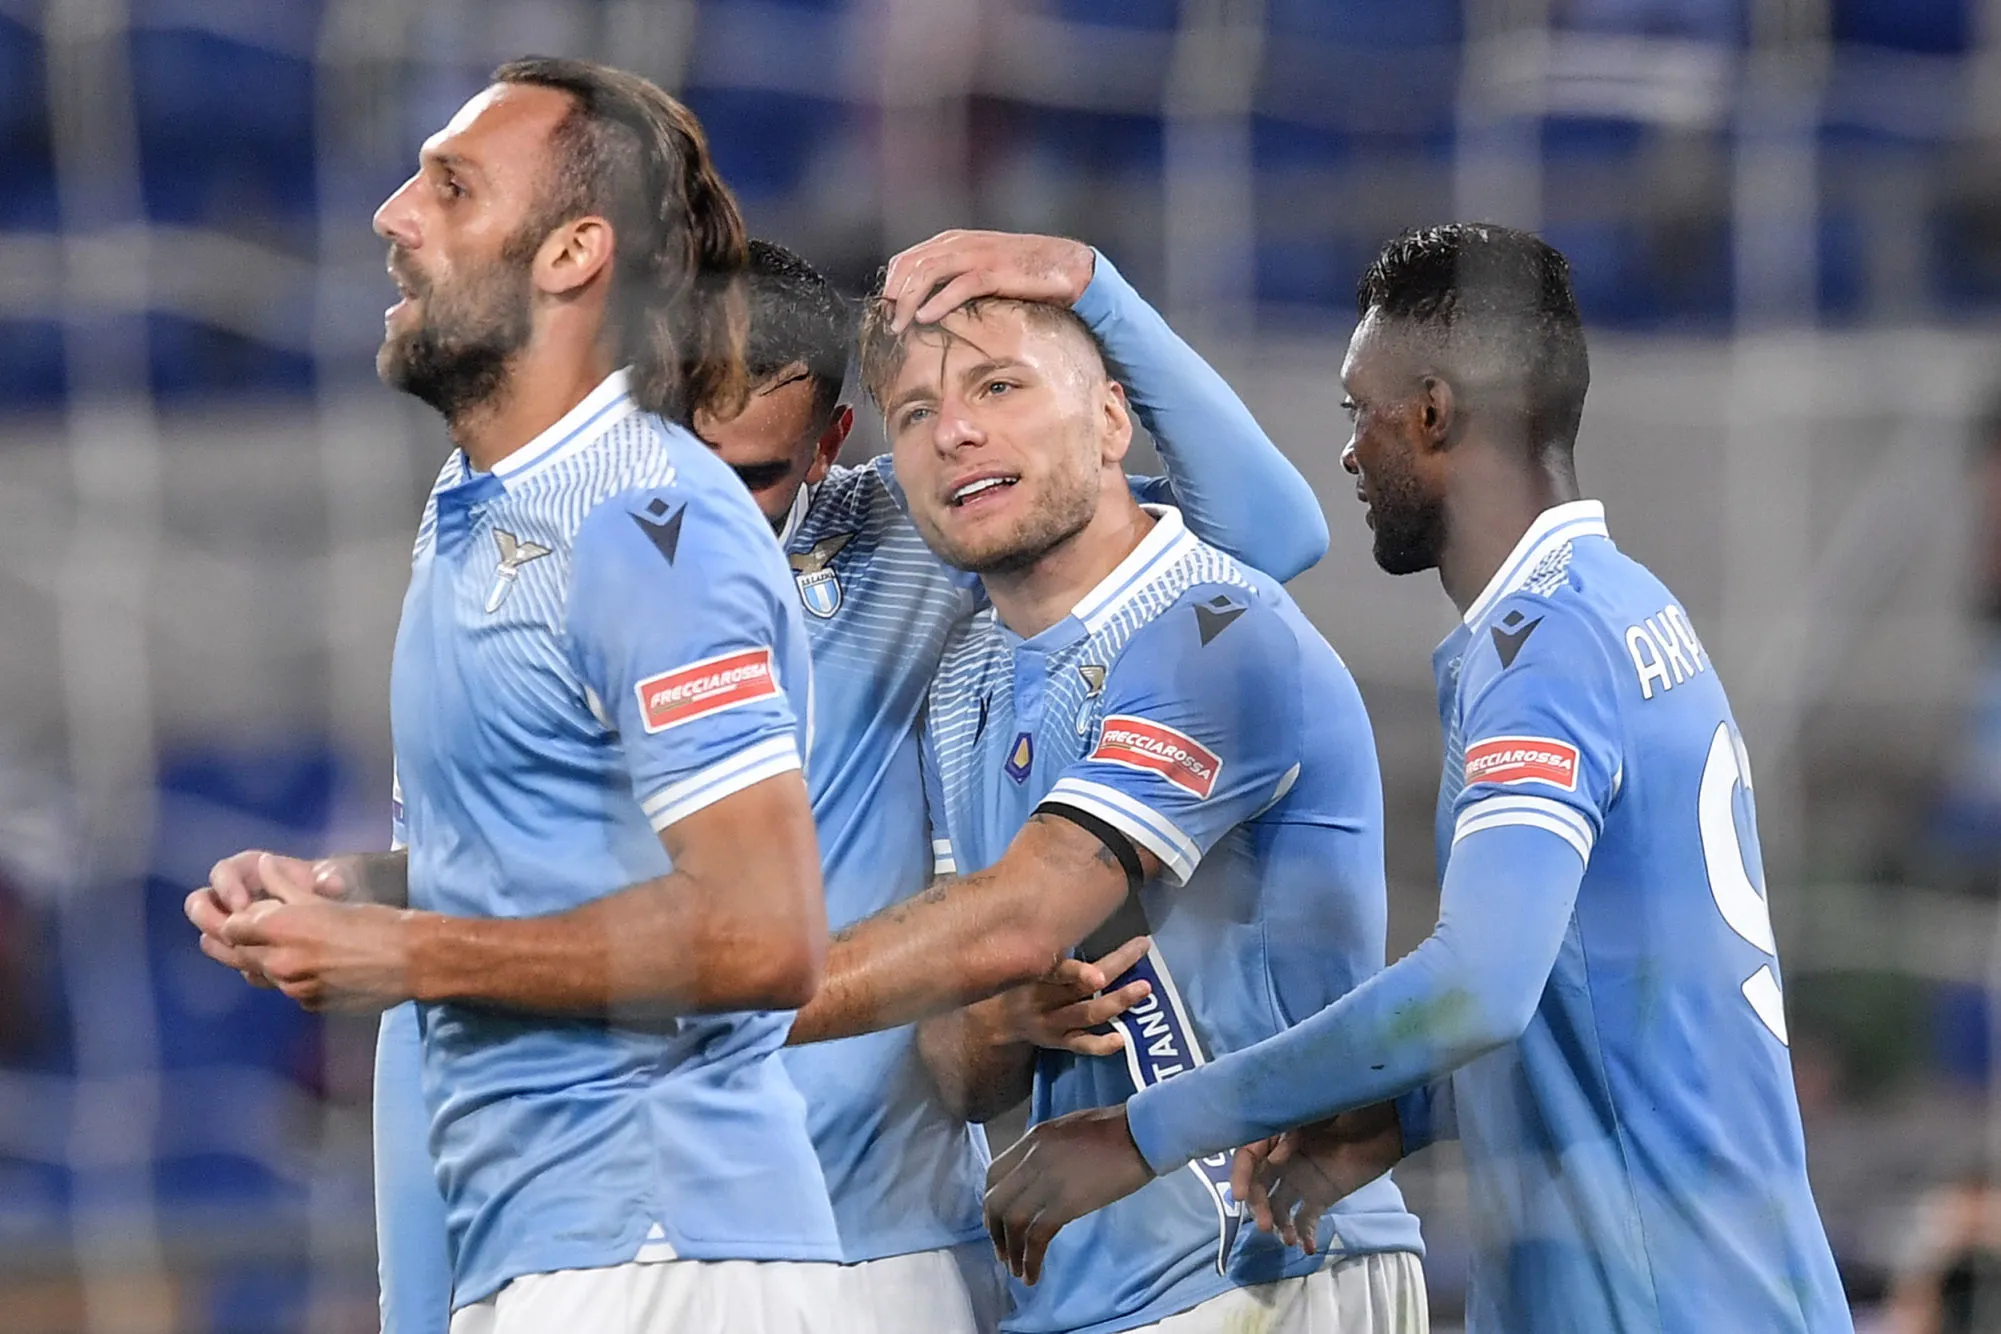 Pronostic Atalanta Bergame Lazio Rome : Analyse, cotes et prono du match de Serie A